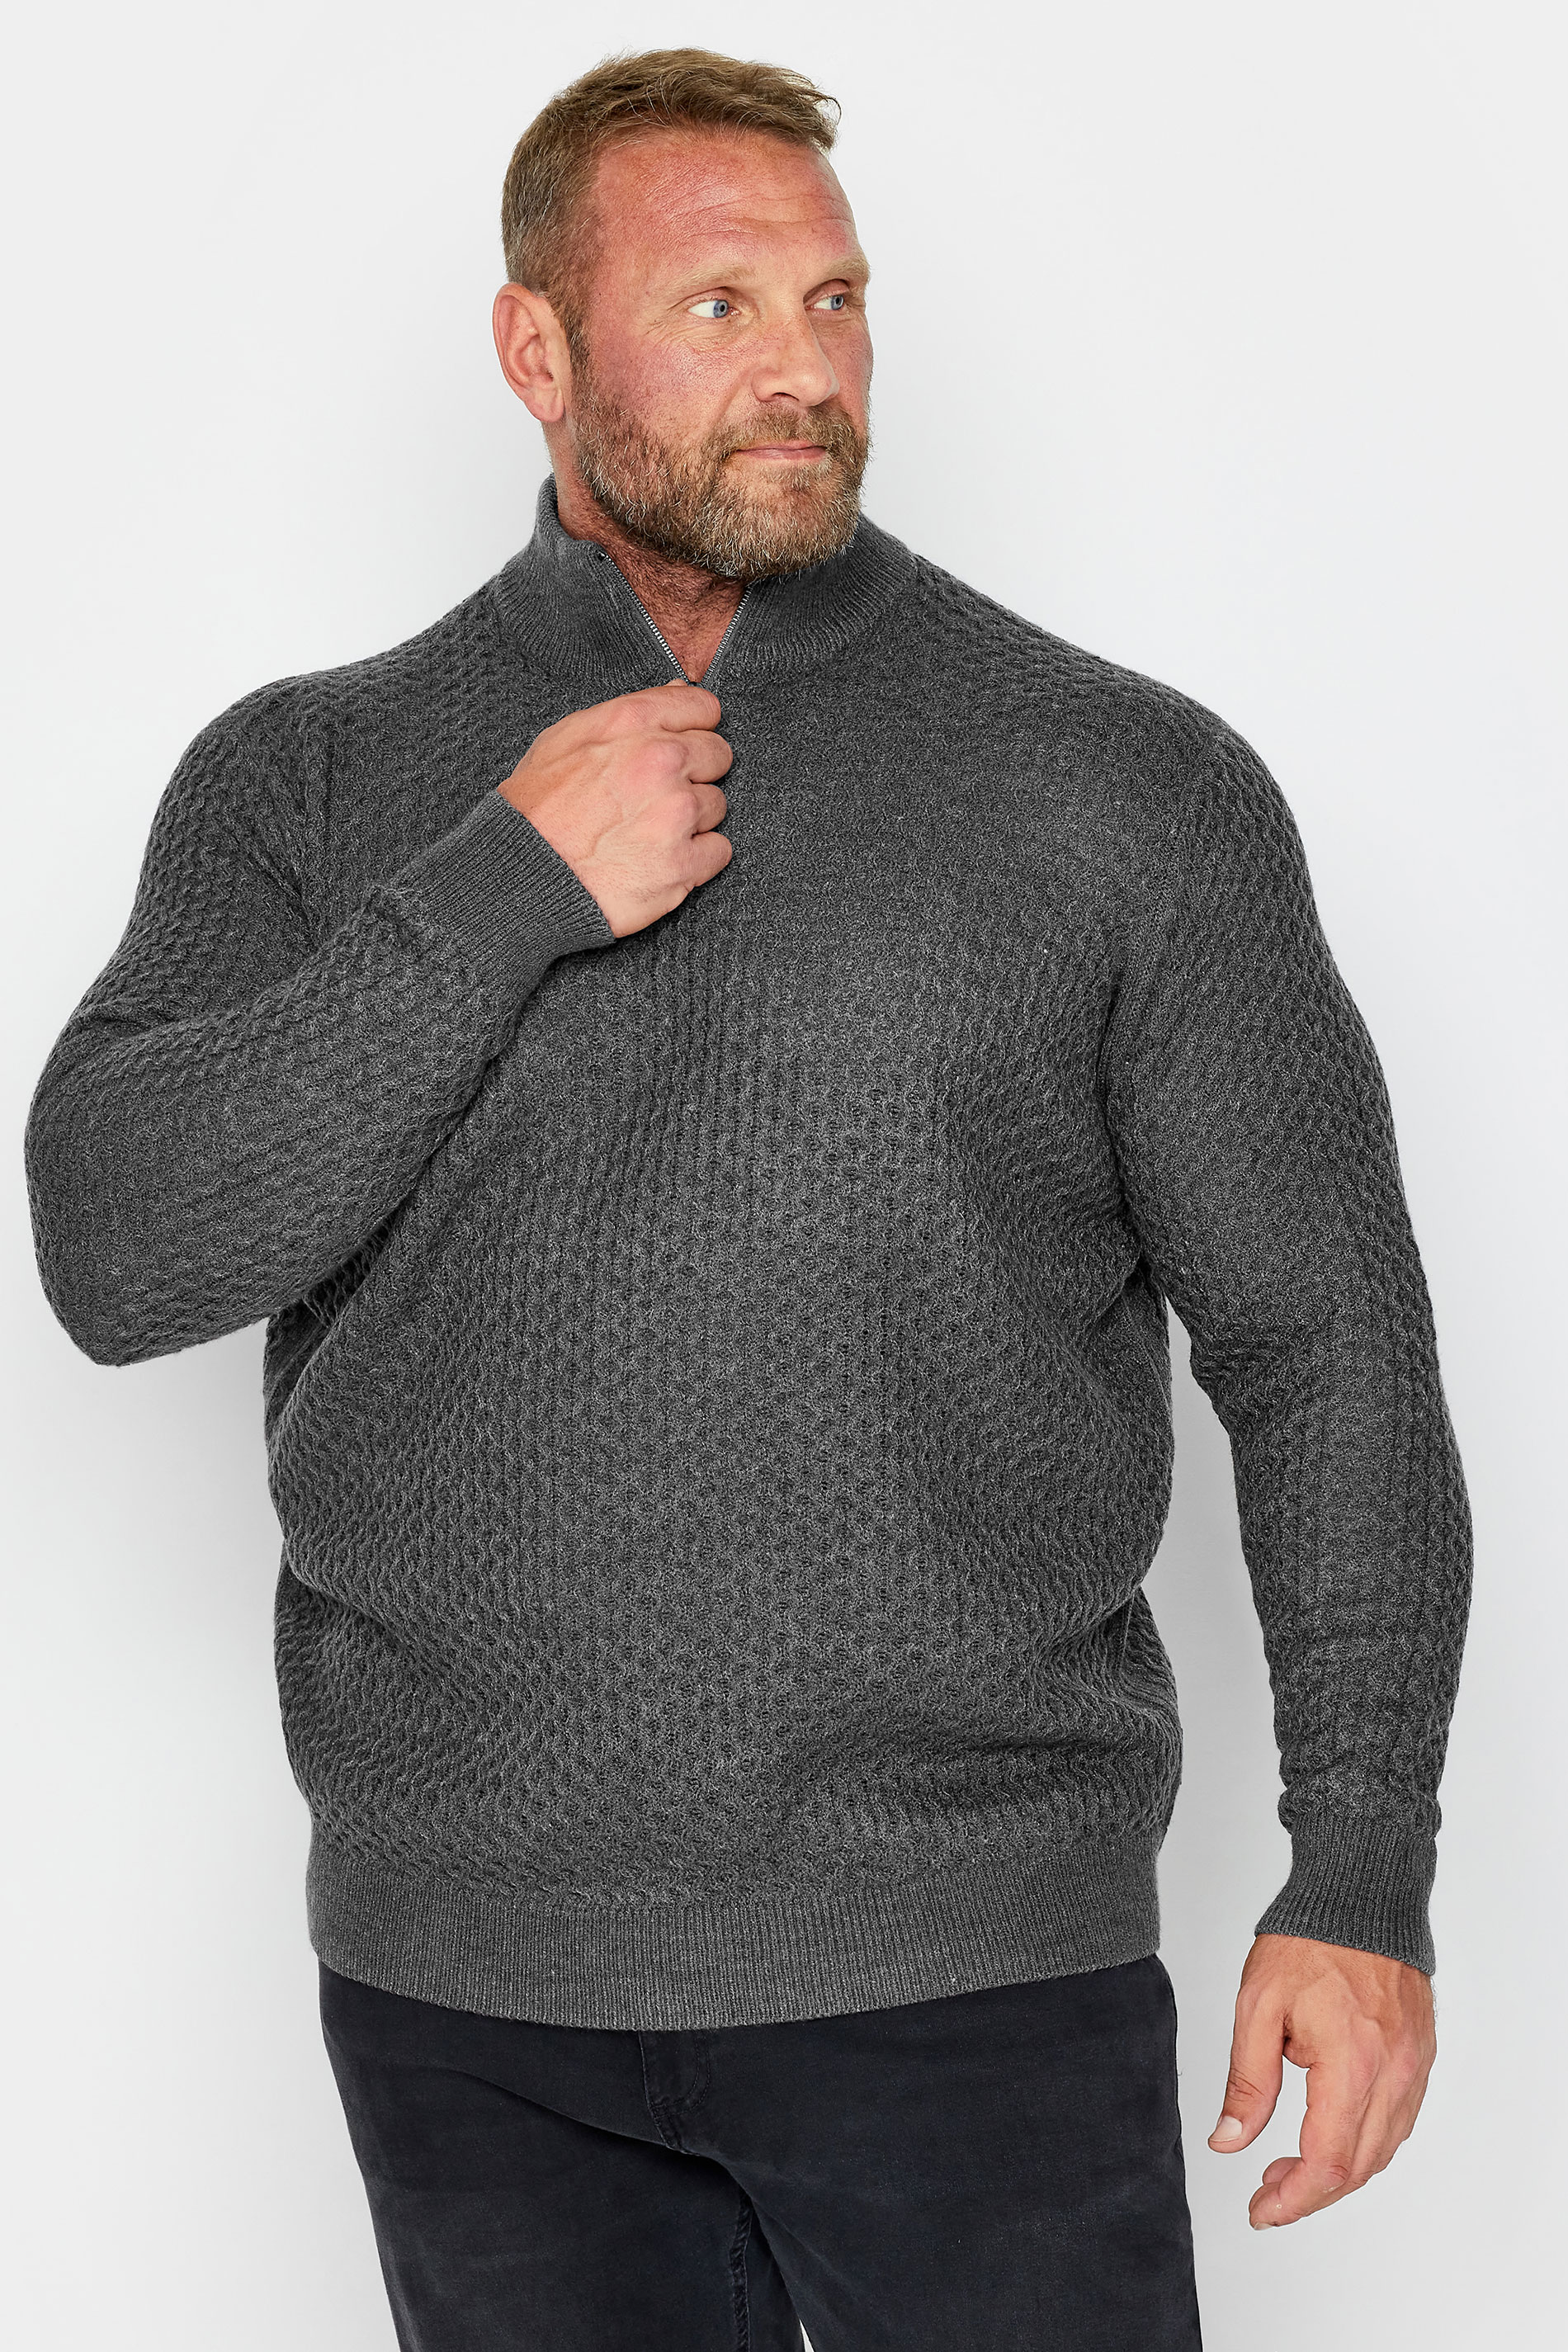 BadRhino Big & Tall Grey Quarter Zip Knitted Jumper | BadRhino 2